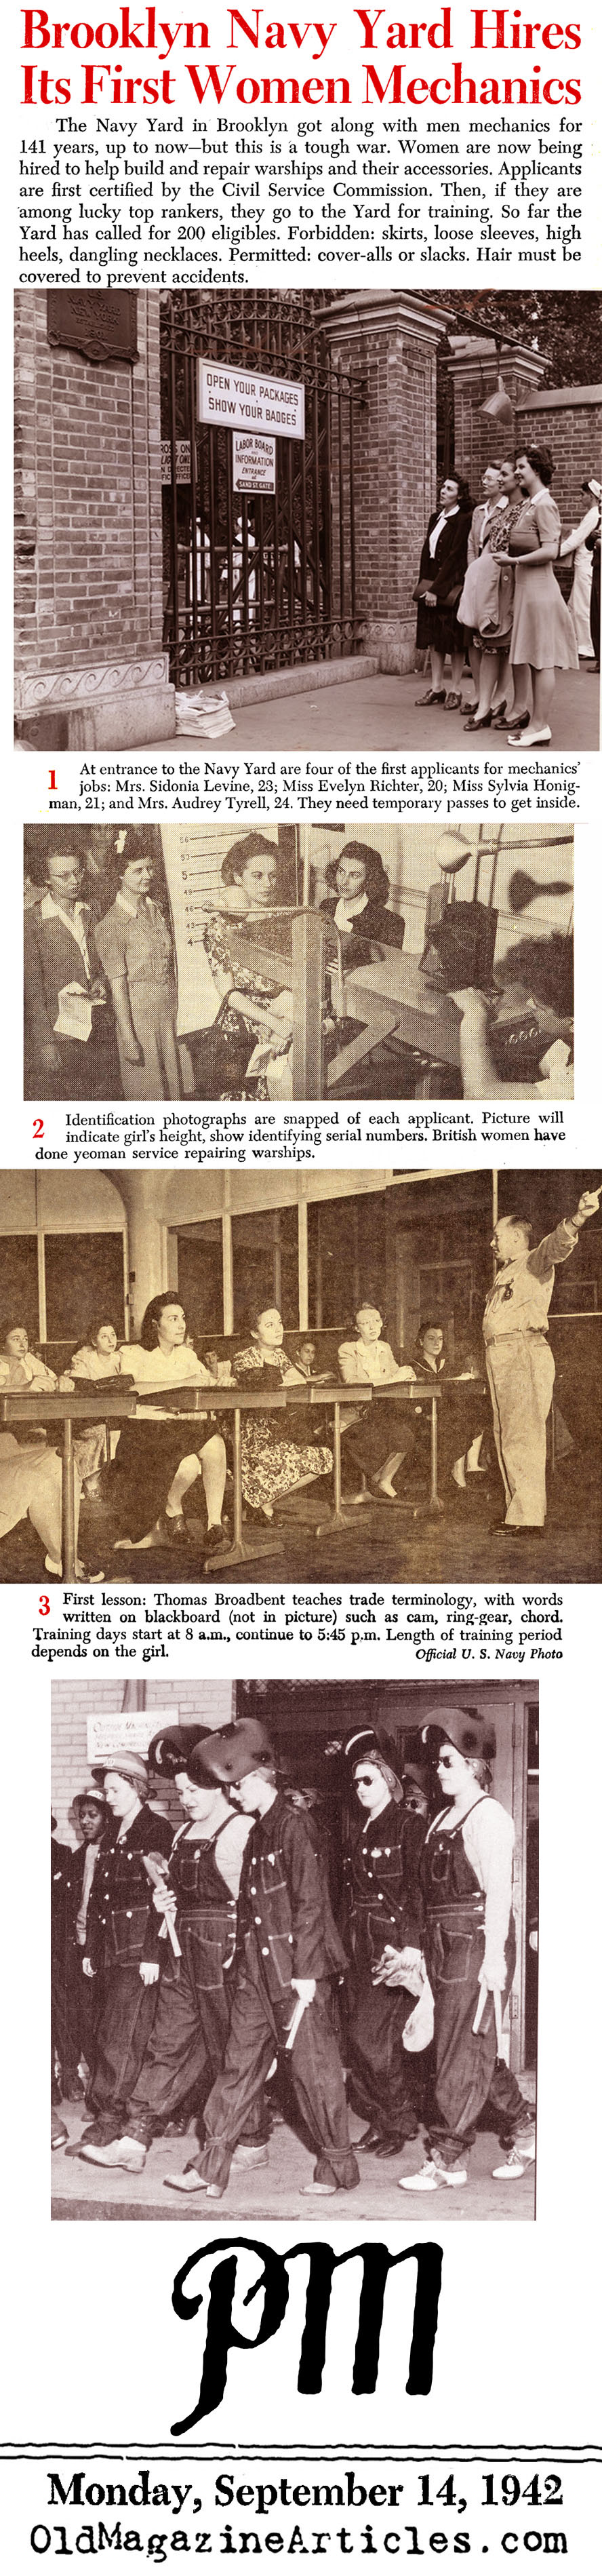 Women At The Brooklyn Navy Yard (<i>PM</I> Tabloid, 1942)